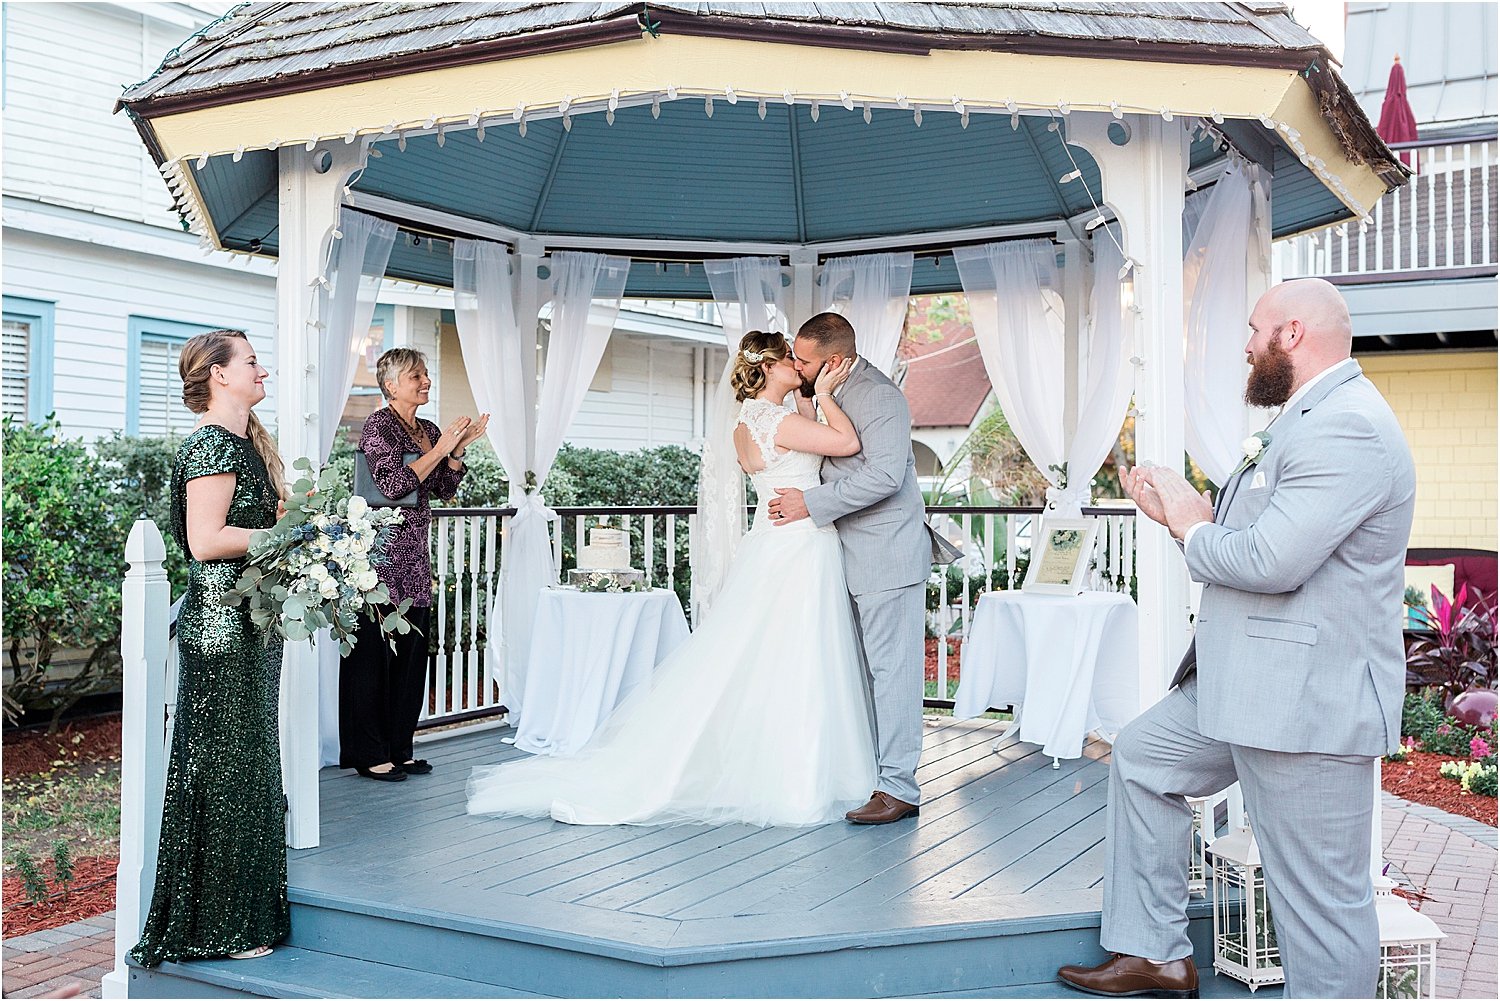 Kasey and Tyler's Wedding at Bayfront Marin St. Augustine, Florida- Jacksonville, Ponte Vedra Beach, St. Augustine, Amelia Island, Florida and Destination Fine Art Film Wedding Photography_0017.jpg